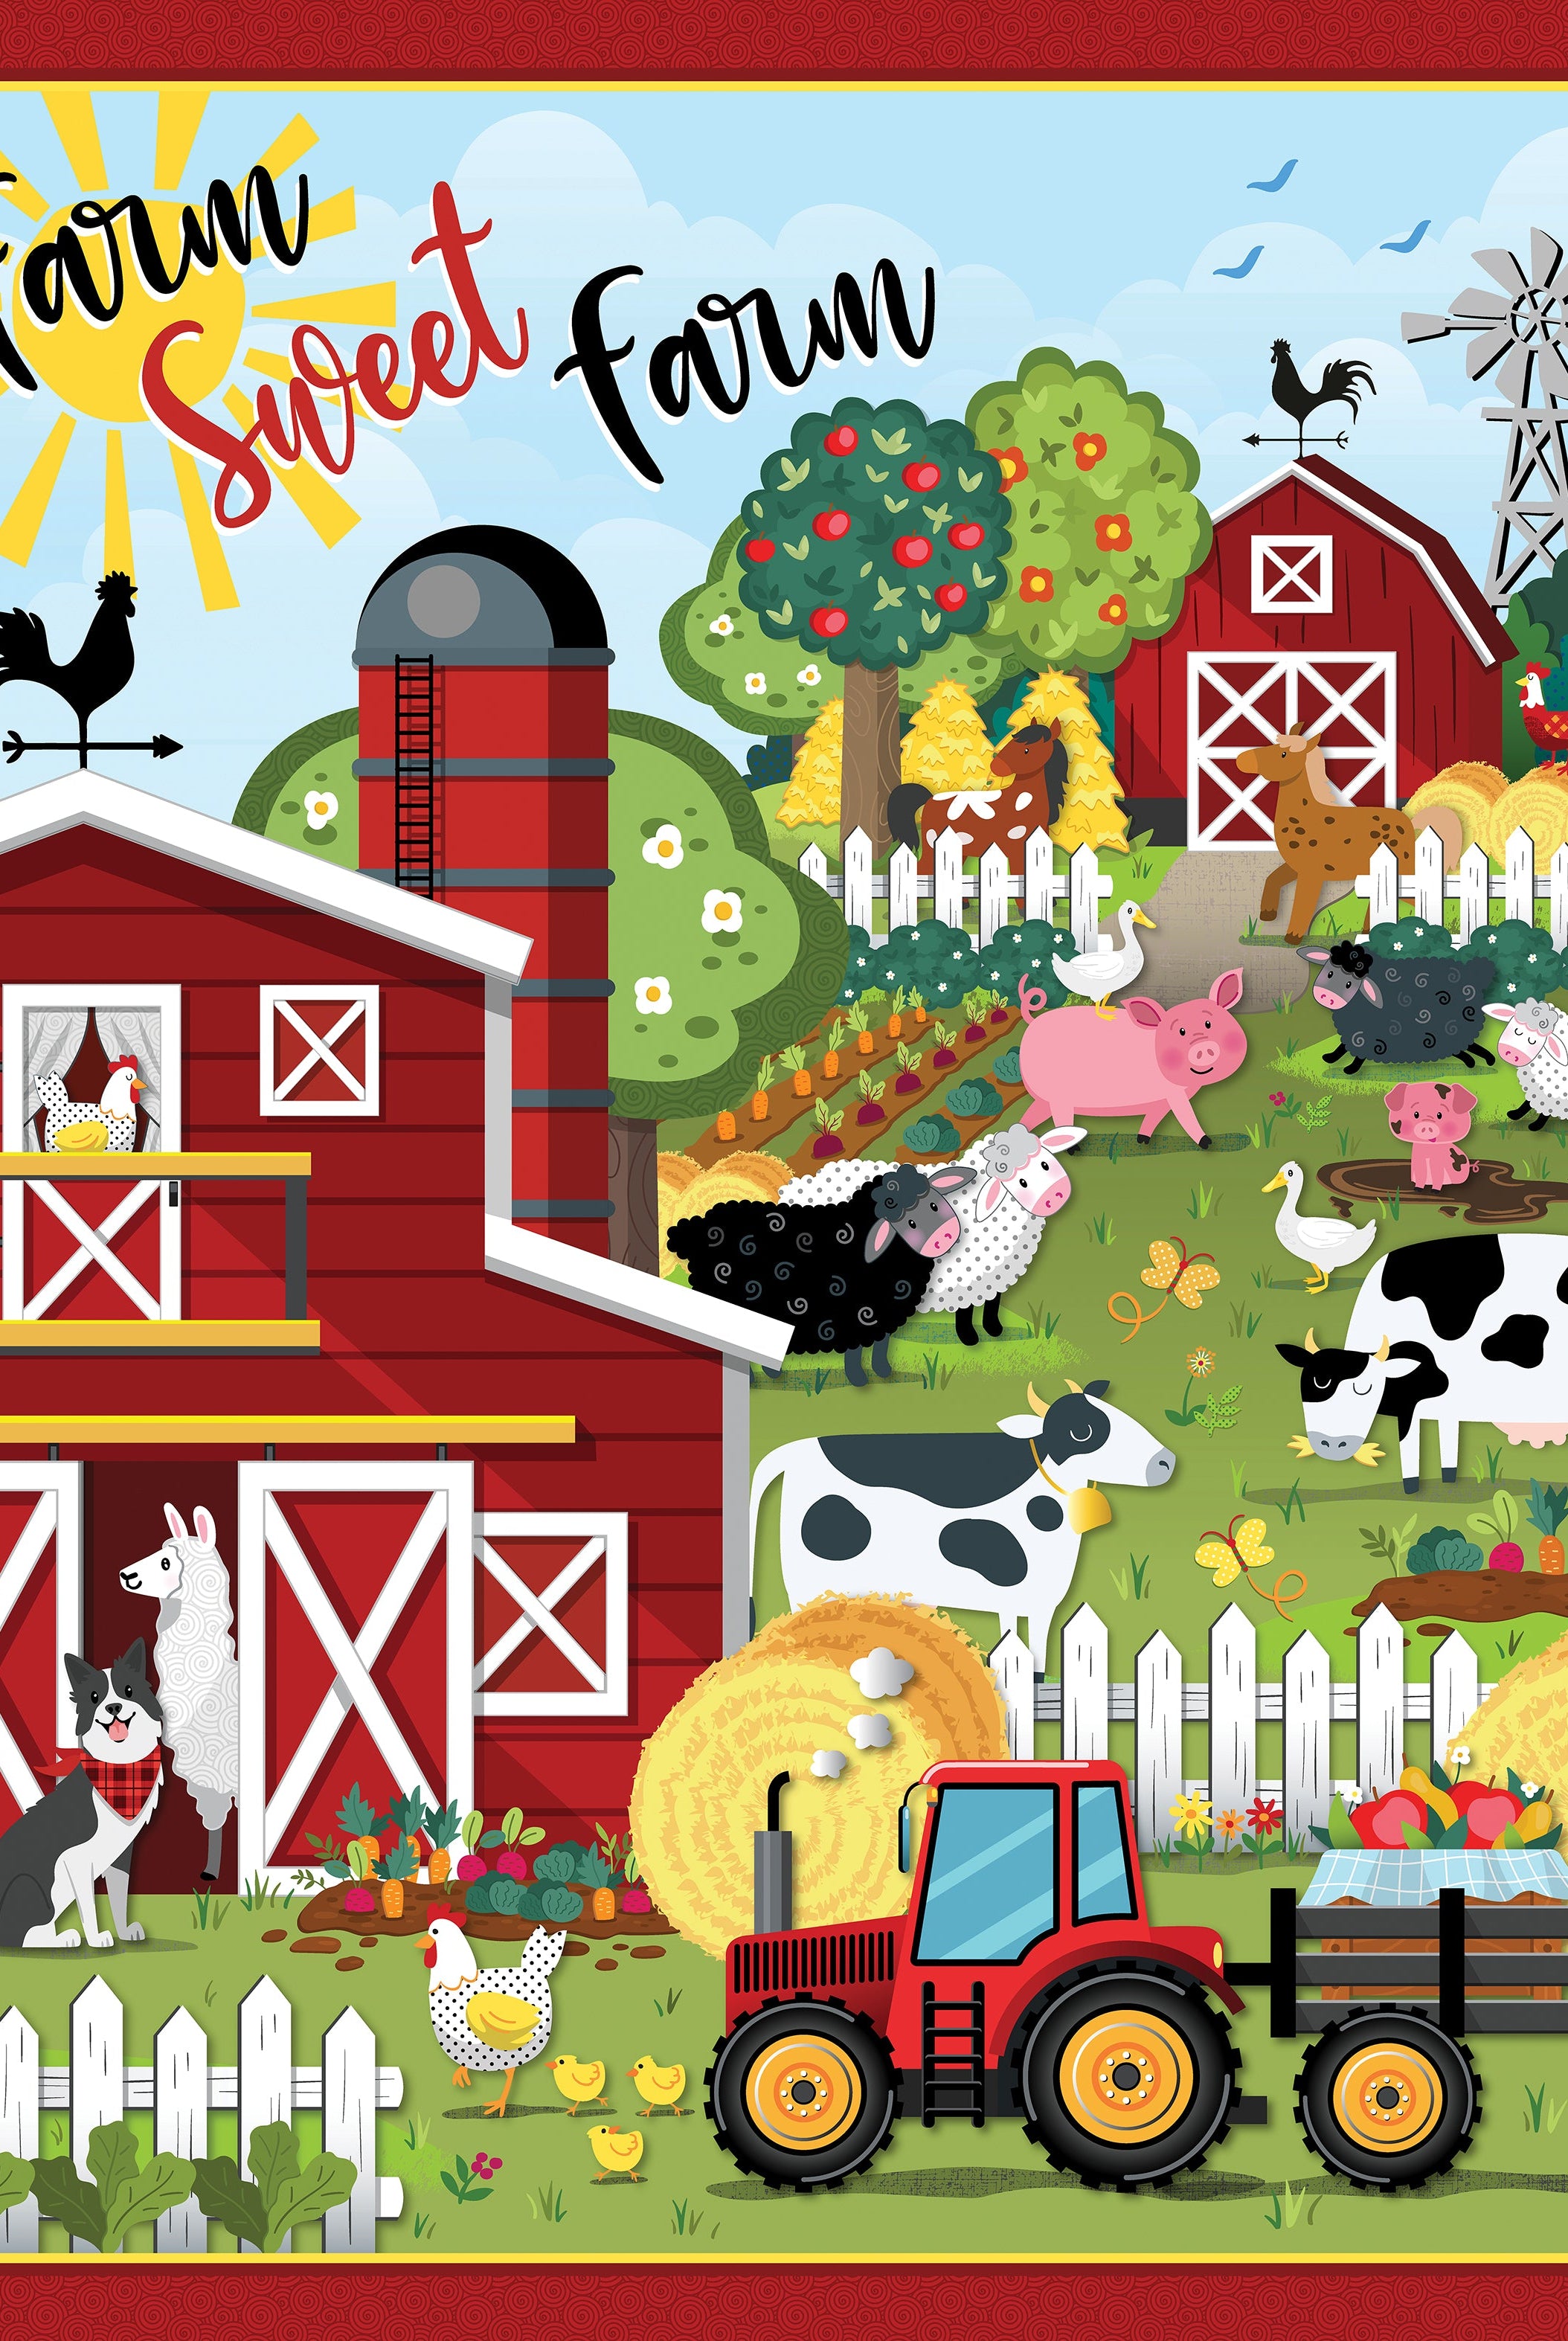 Scenic barnyard with barn, tractors and farm animals on 36 x 44 inch panel.  Barnyard Rules Sweet Farm Panel.